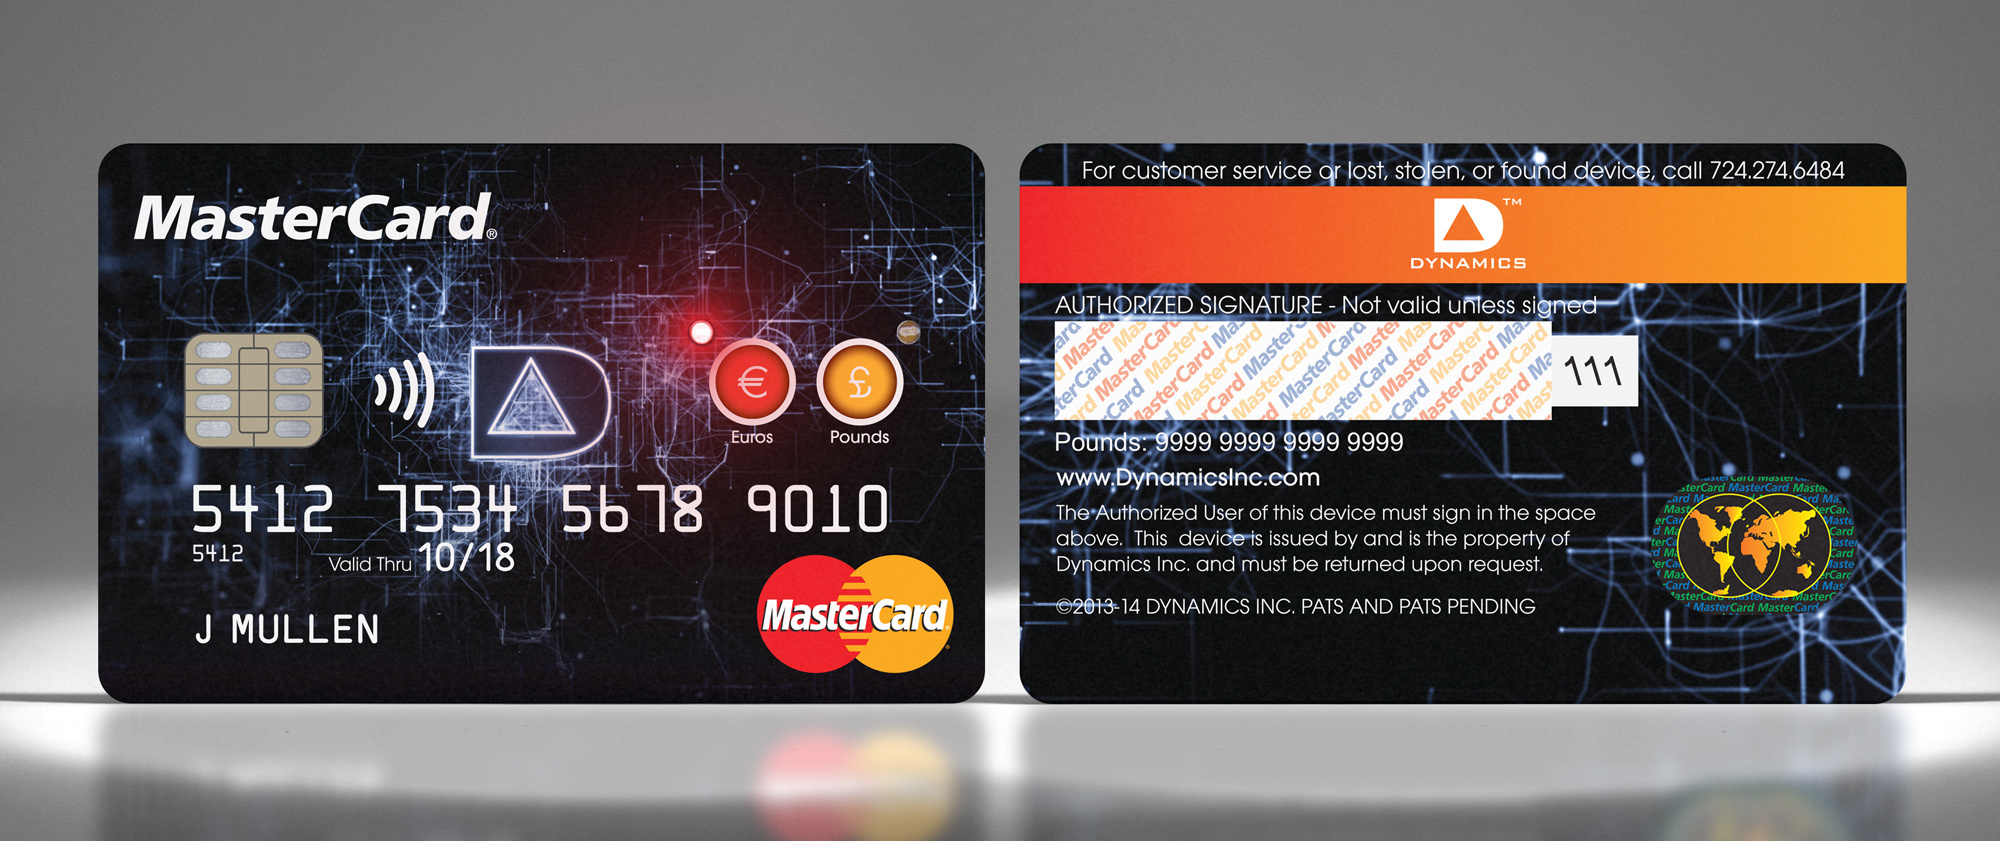 MasterCard_08